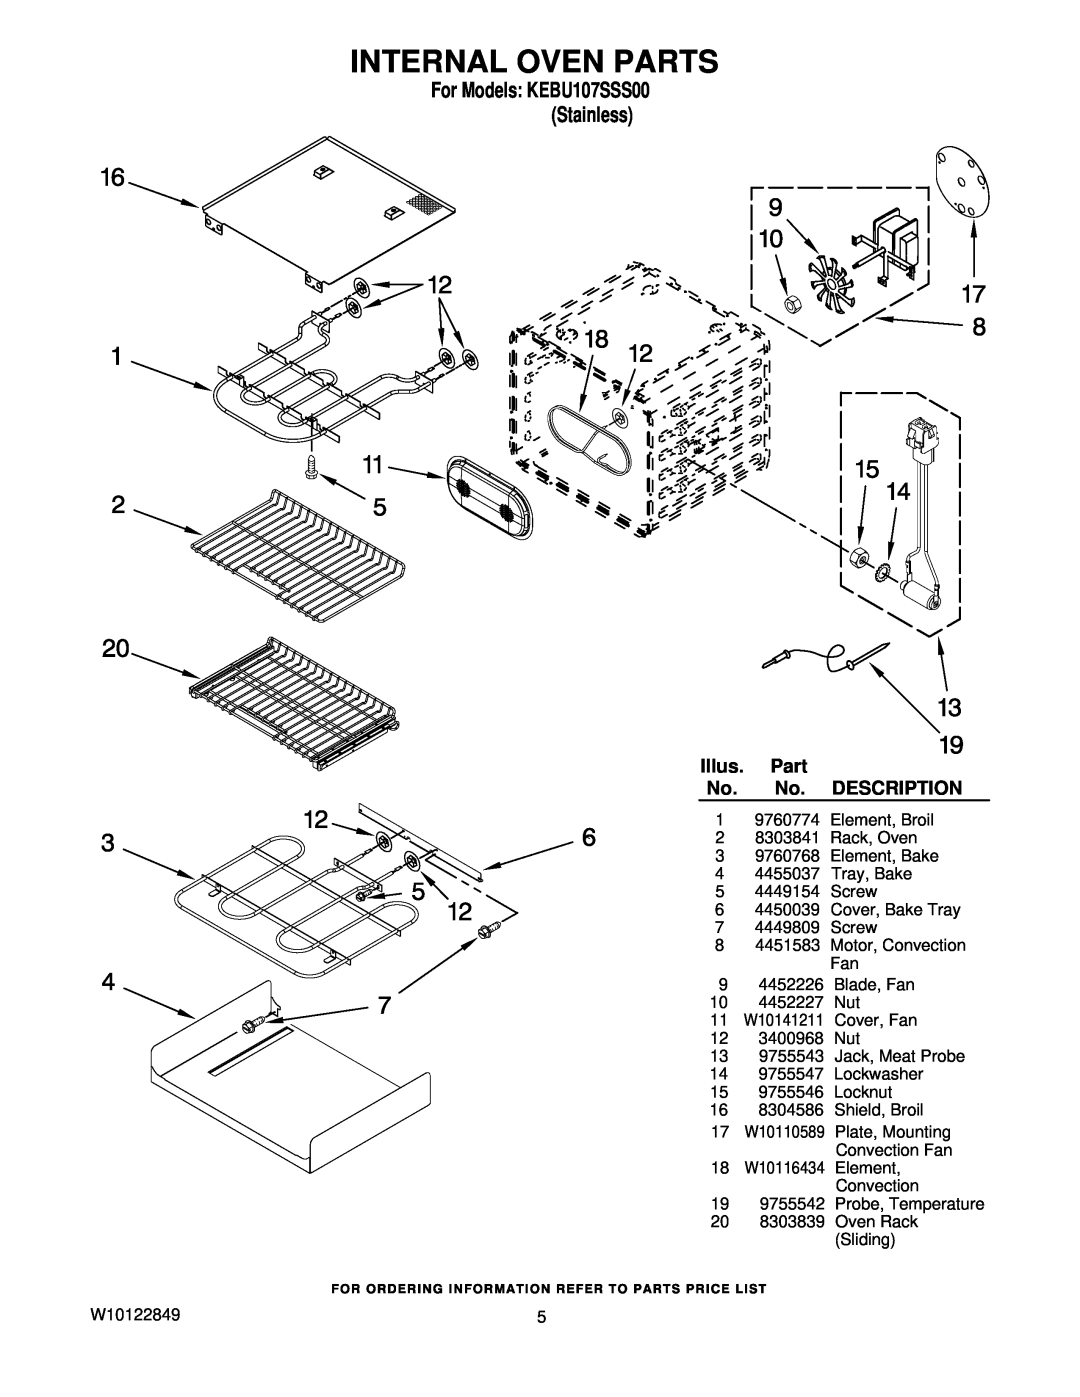 KitchenAid KEBU107SSS00 manual Internal Oven Parts, Illus. Part, Description, W10141211, W10110589, W10116434 